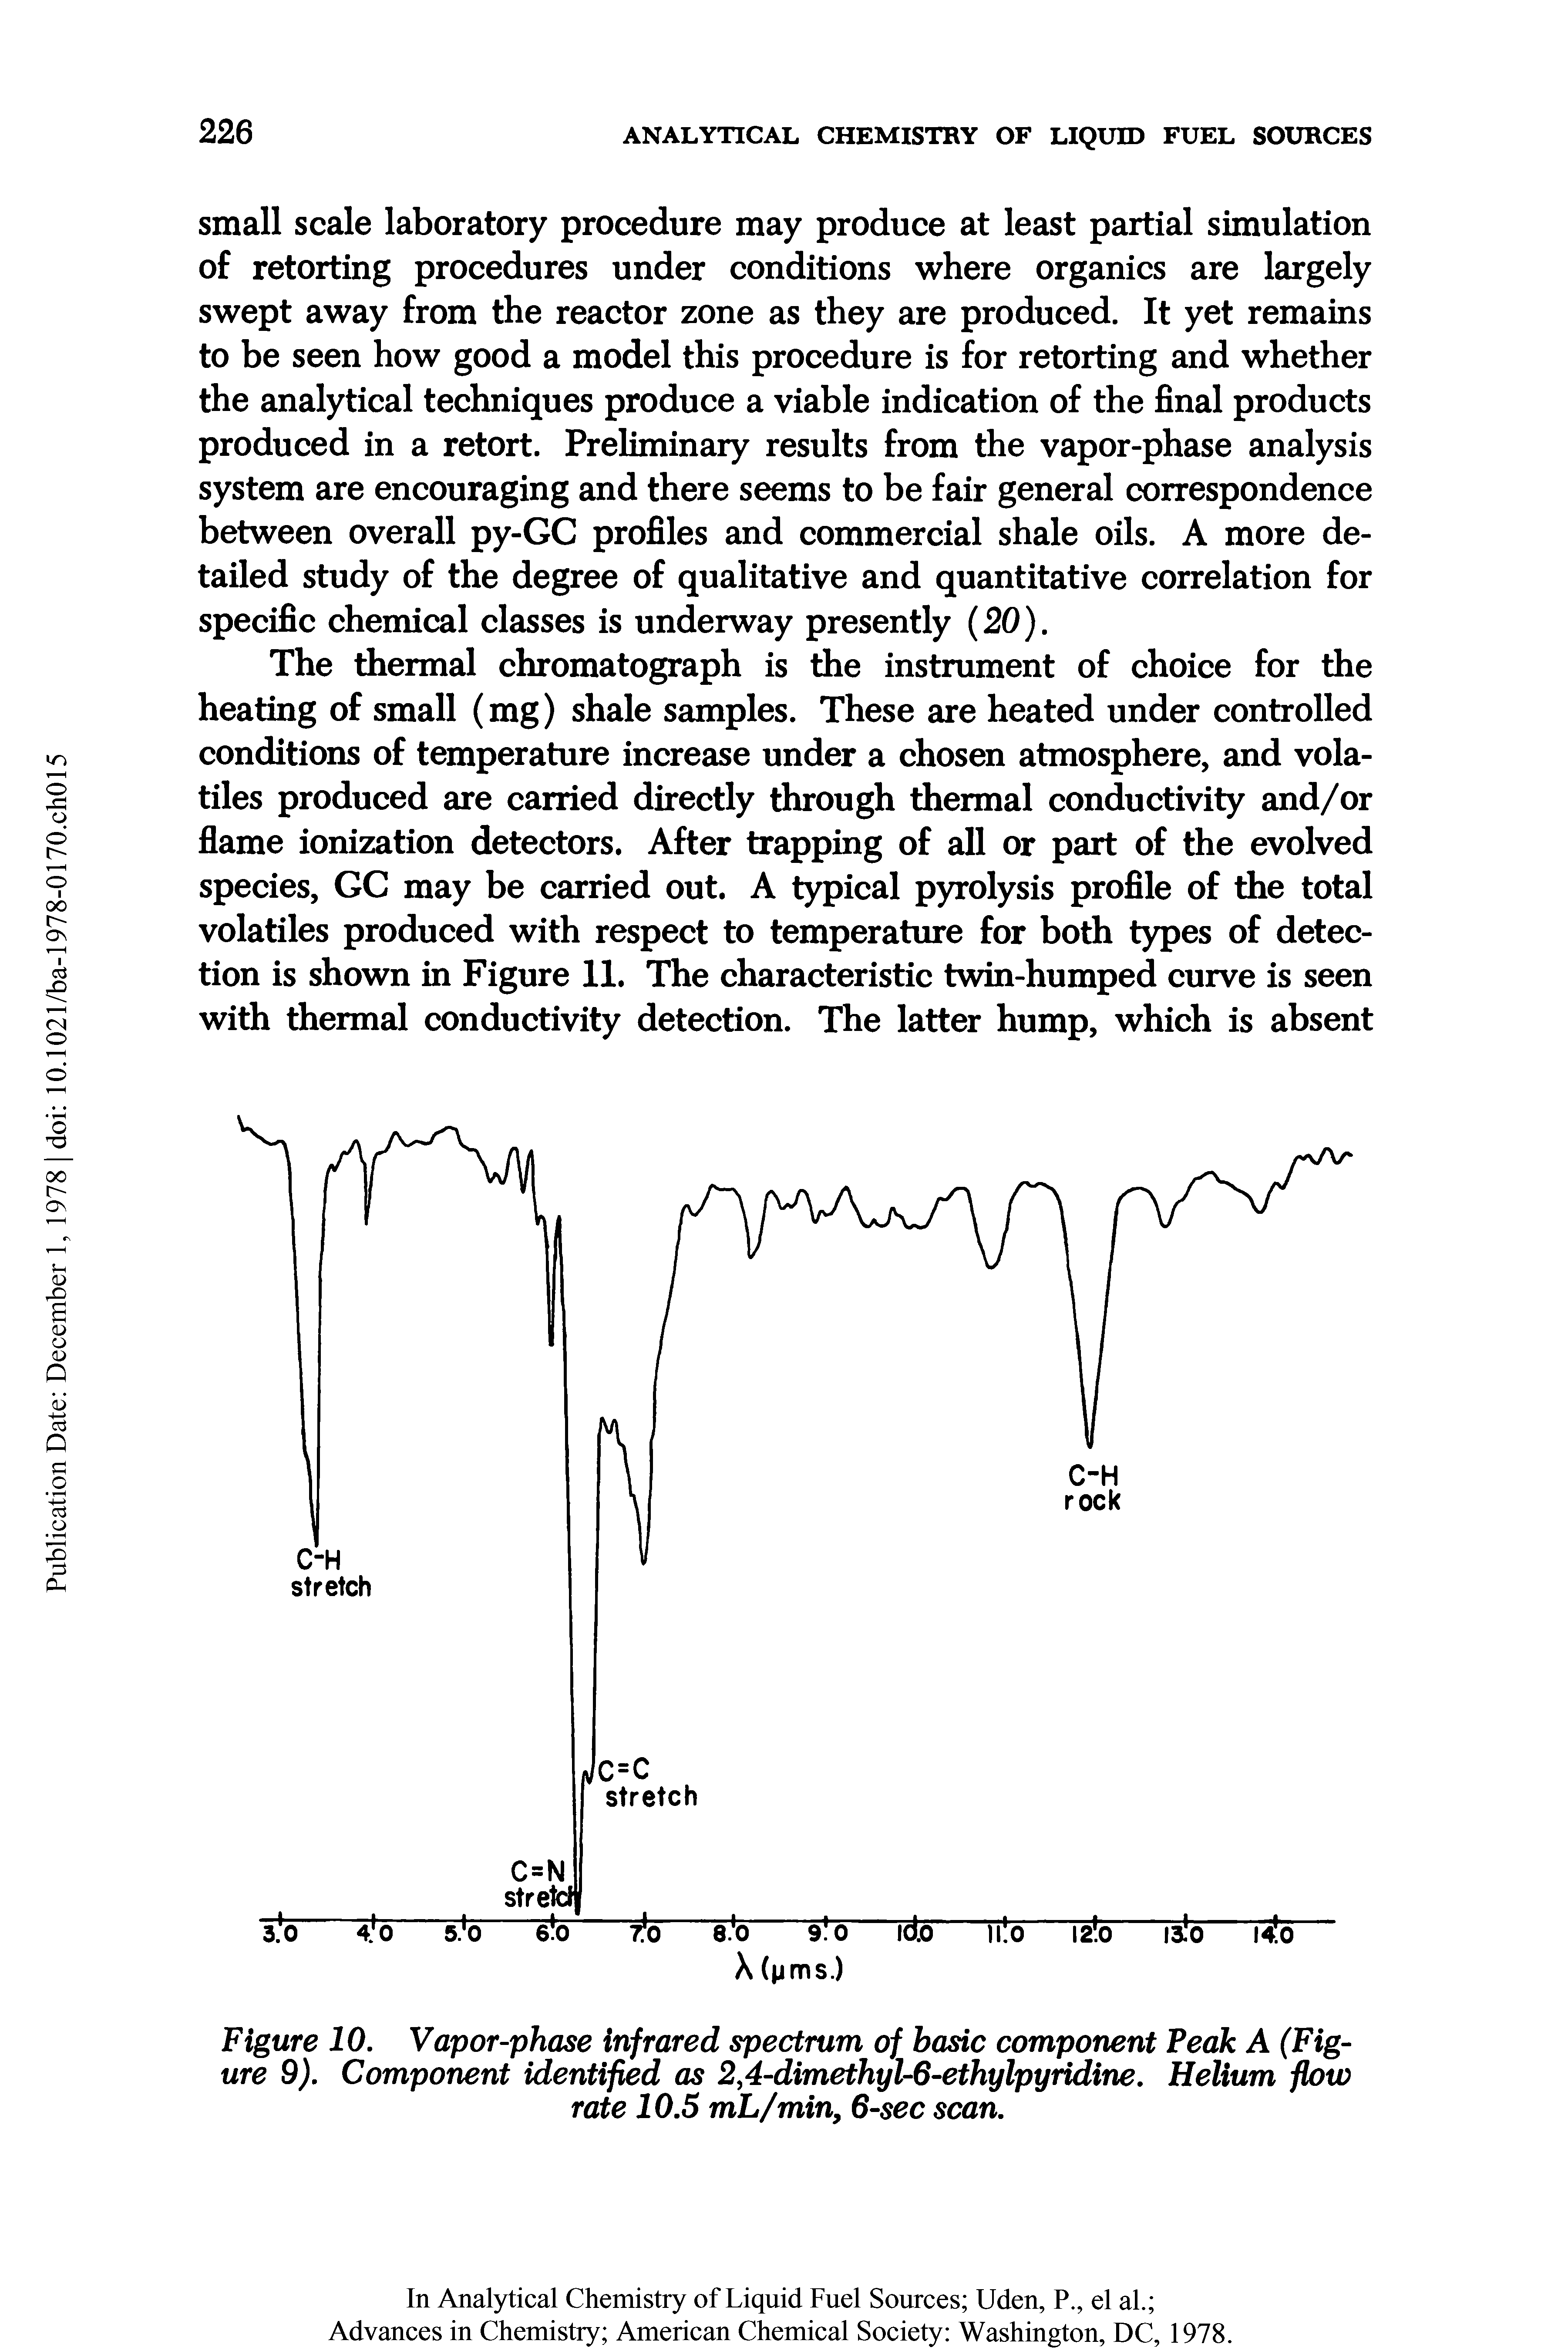 Figure 10. Vapor-phase infrared spectrum of basic component Peak A (Figure 9). Component identified as 2,4-dimethyl-6-ethylpyridine. Helium flow rate 10.5 mL/min, 6-sec scan.